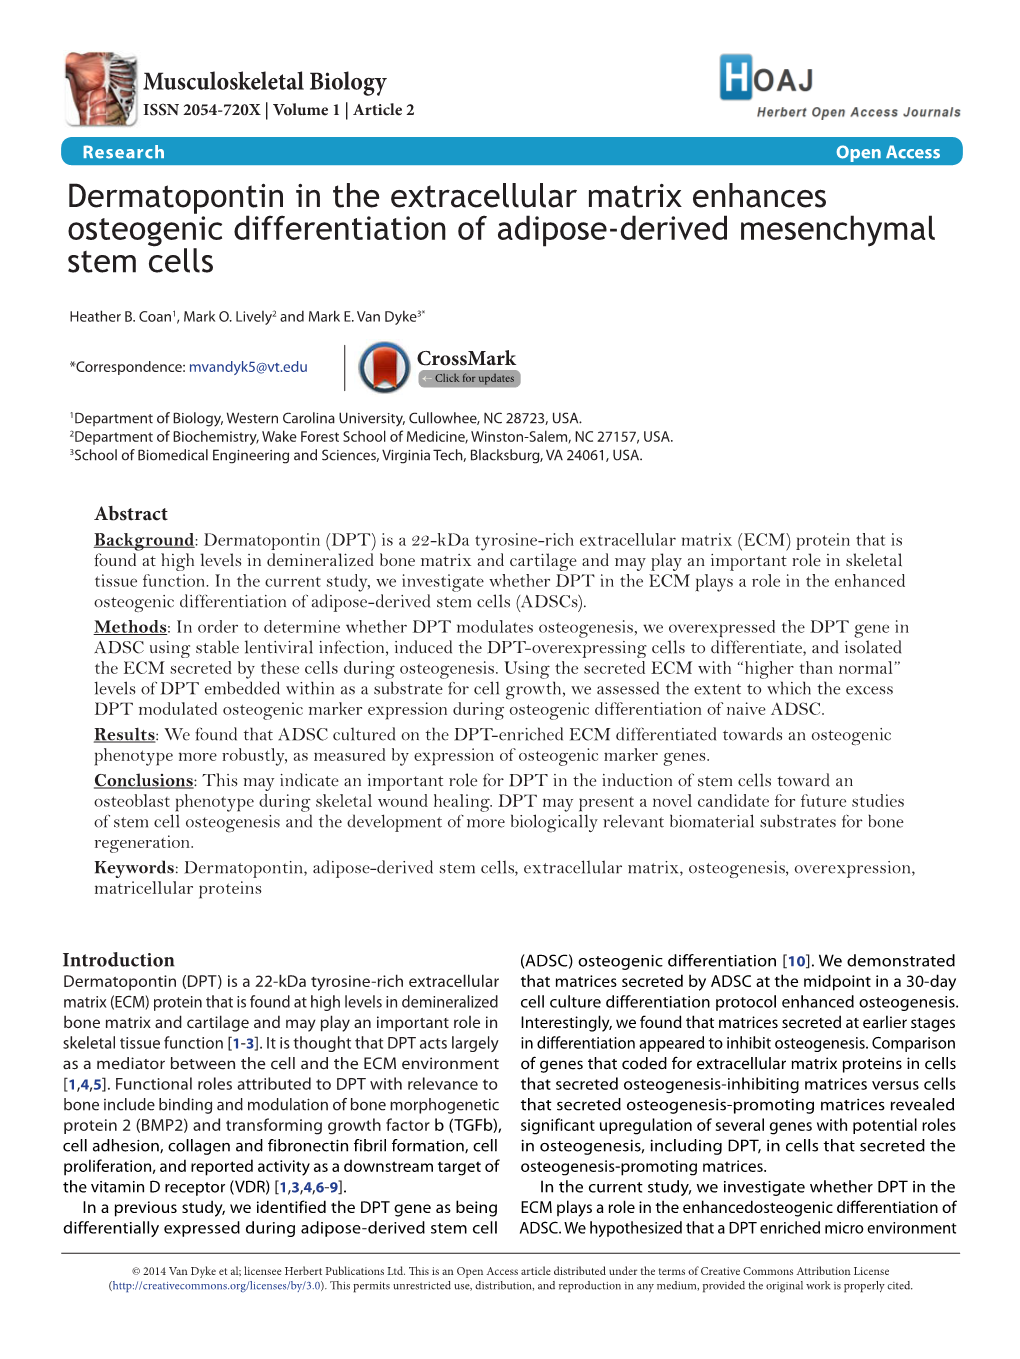 Dermatopontin in the Extracellular Matrix Enhances Osteogenic Differentiation of Adipose-Derived Mesenchymal Stem Cells